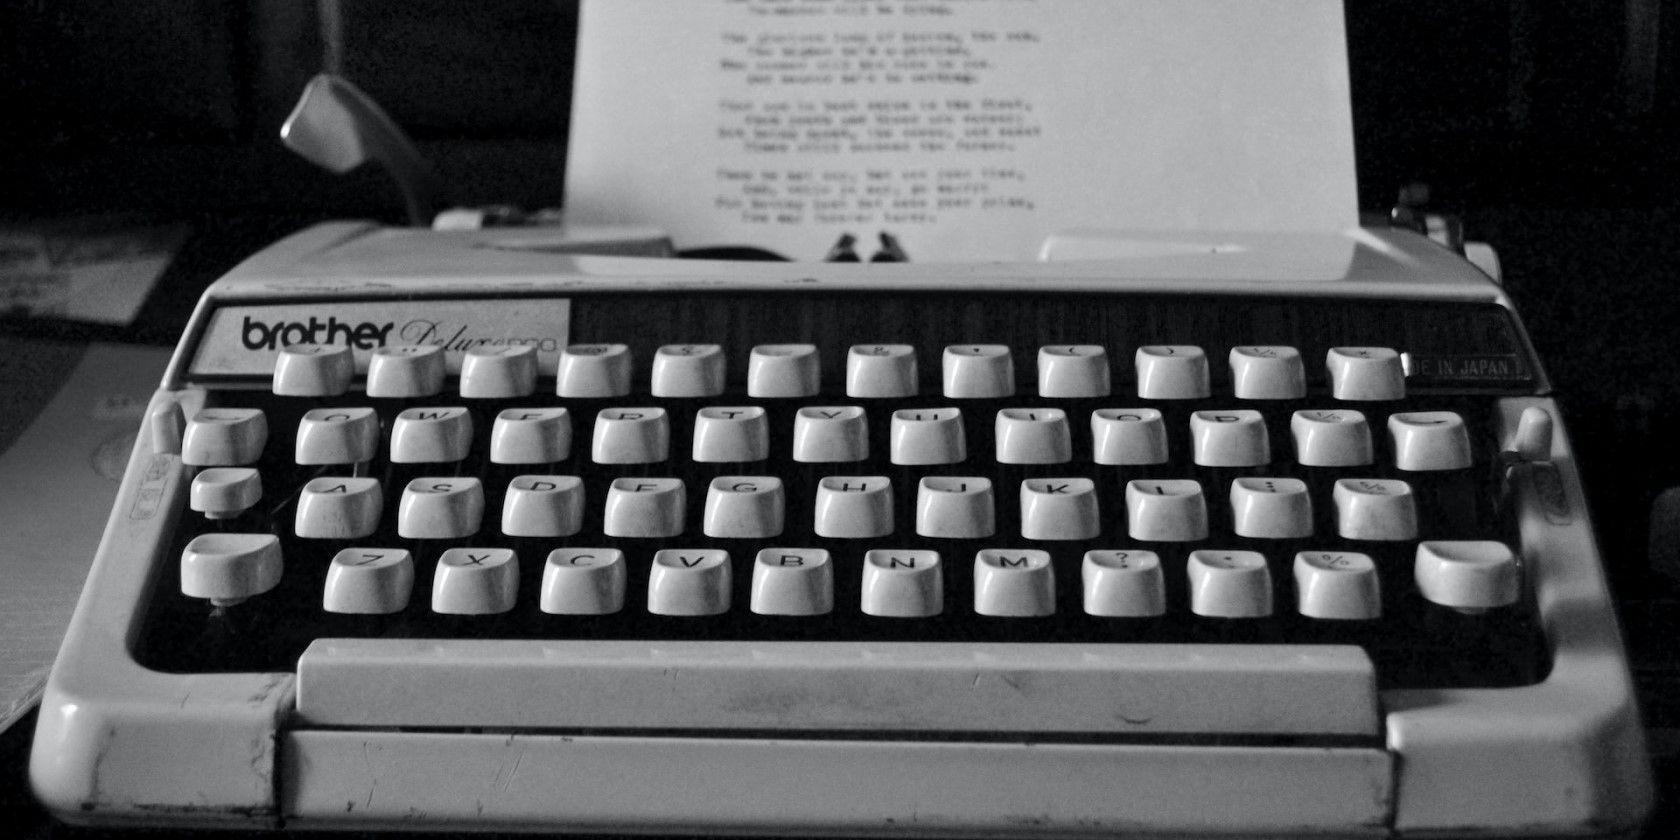 Old Brother Typewriter Close-Up